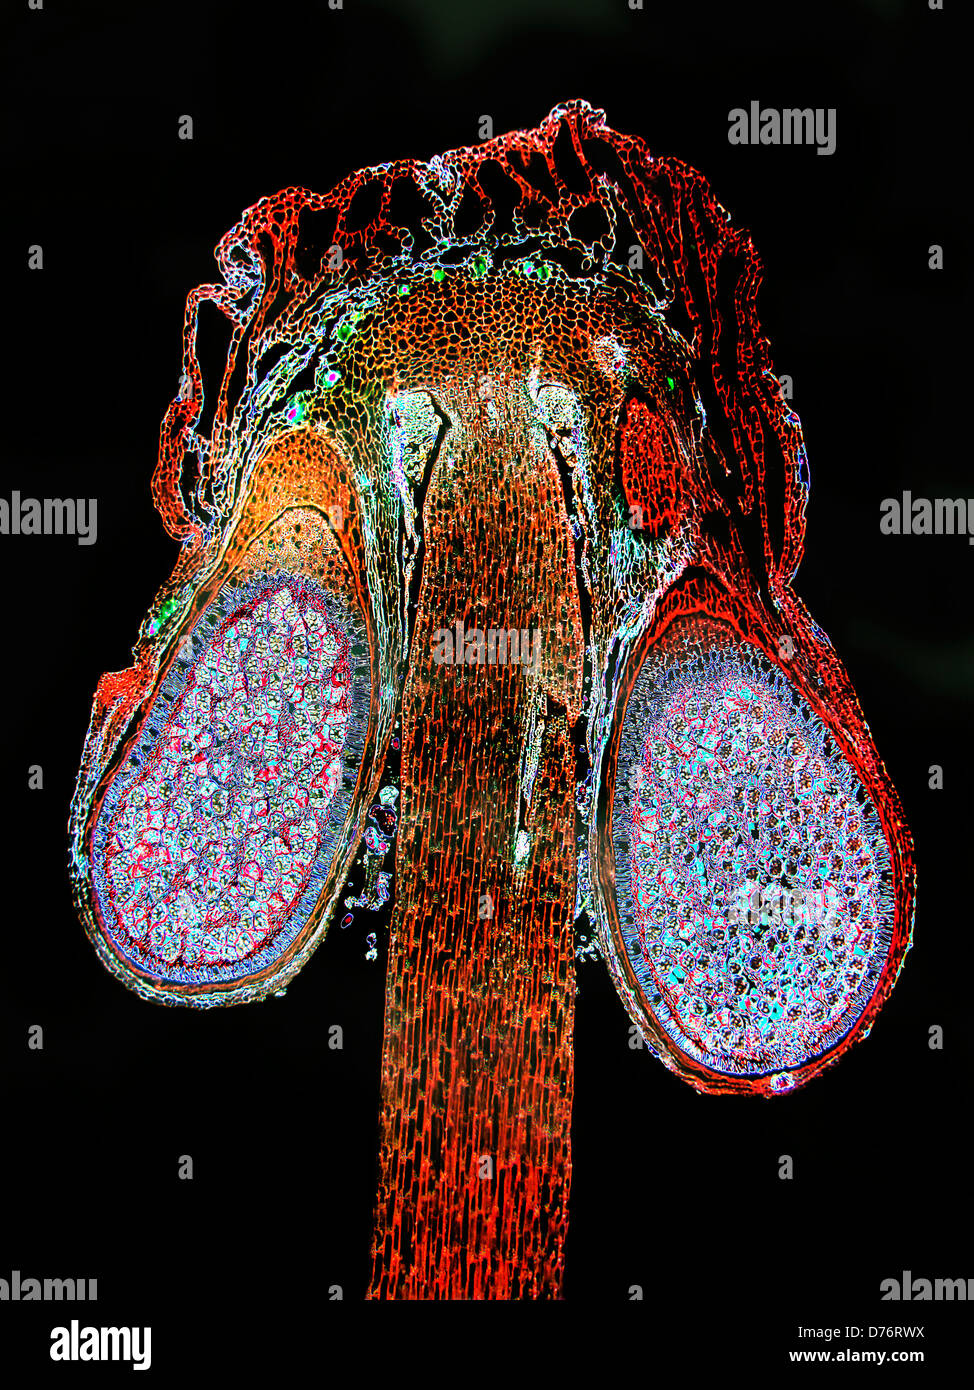 Liverwort Conocephalum sporophyte magnification 40x Stock Photo